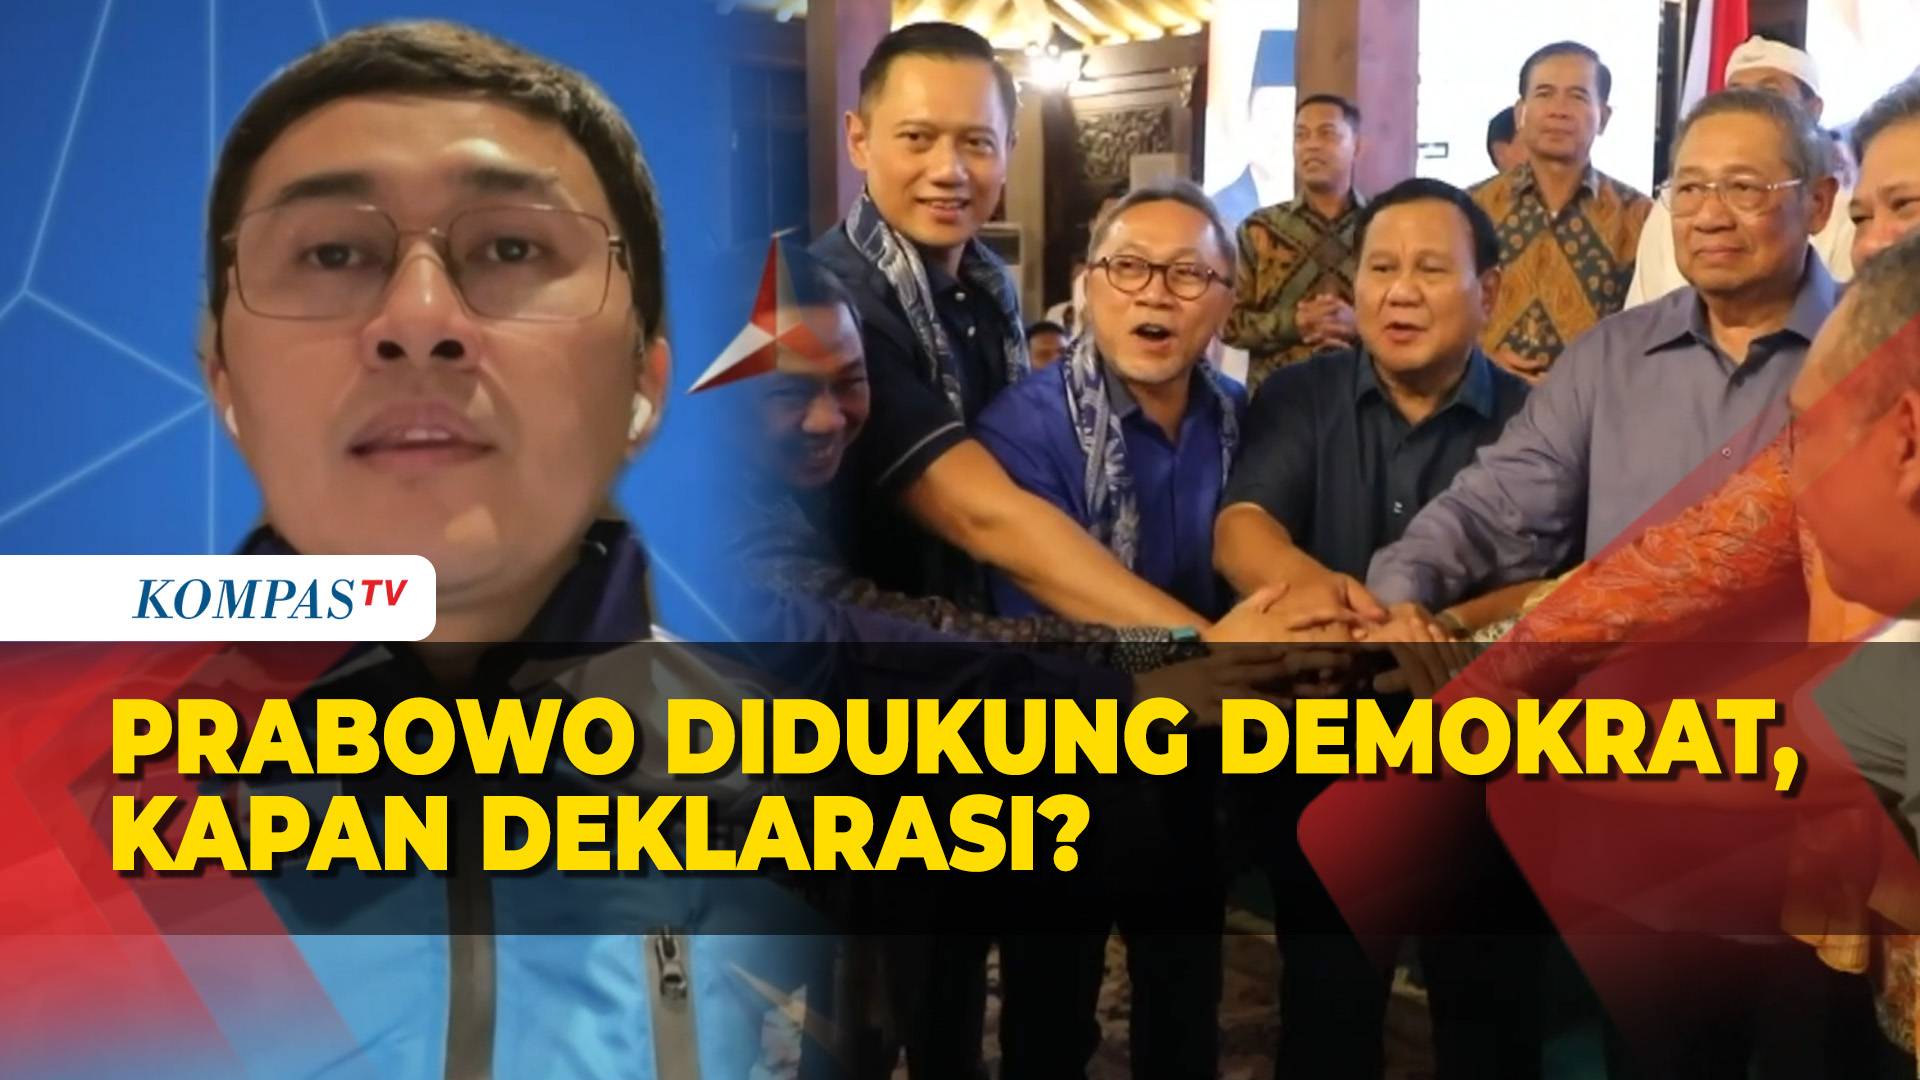 Prabowo Didukung Partai Demokrat, Kapan AHY Deklarasi? - Kompas TV | Vidio